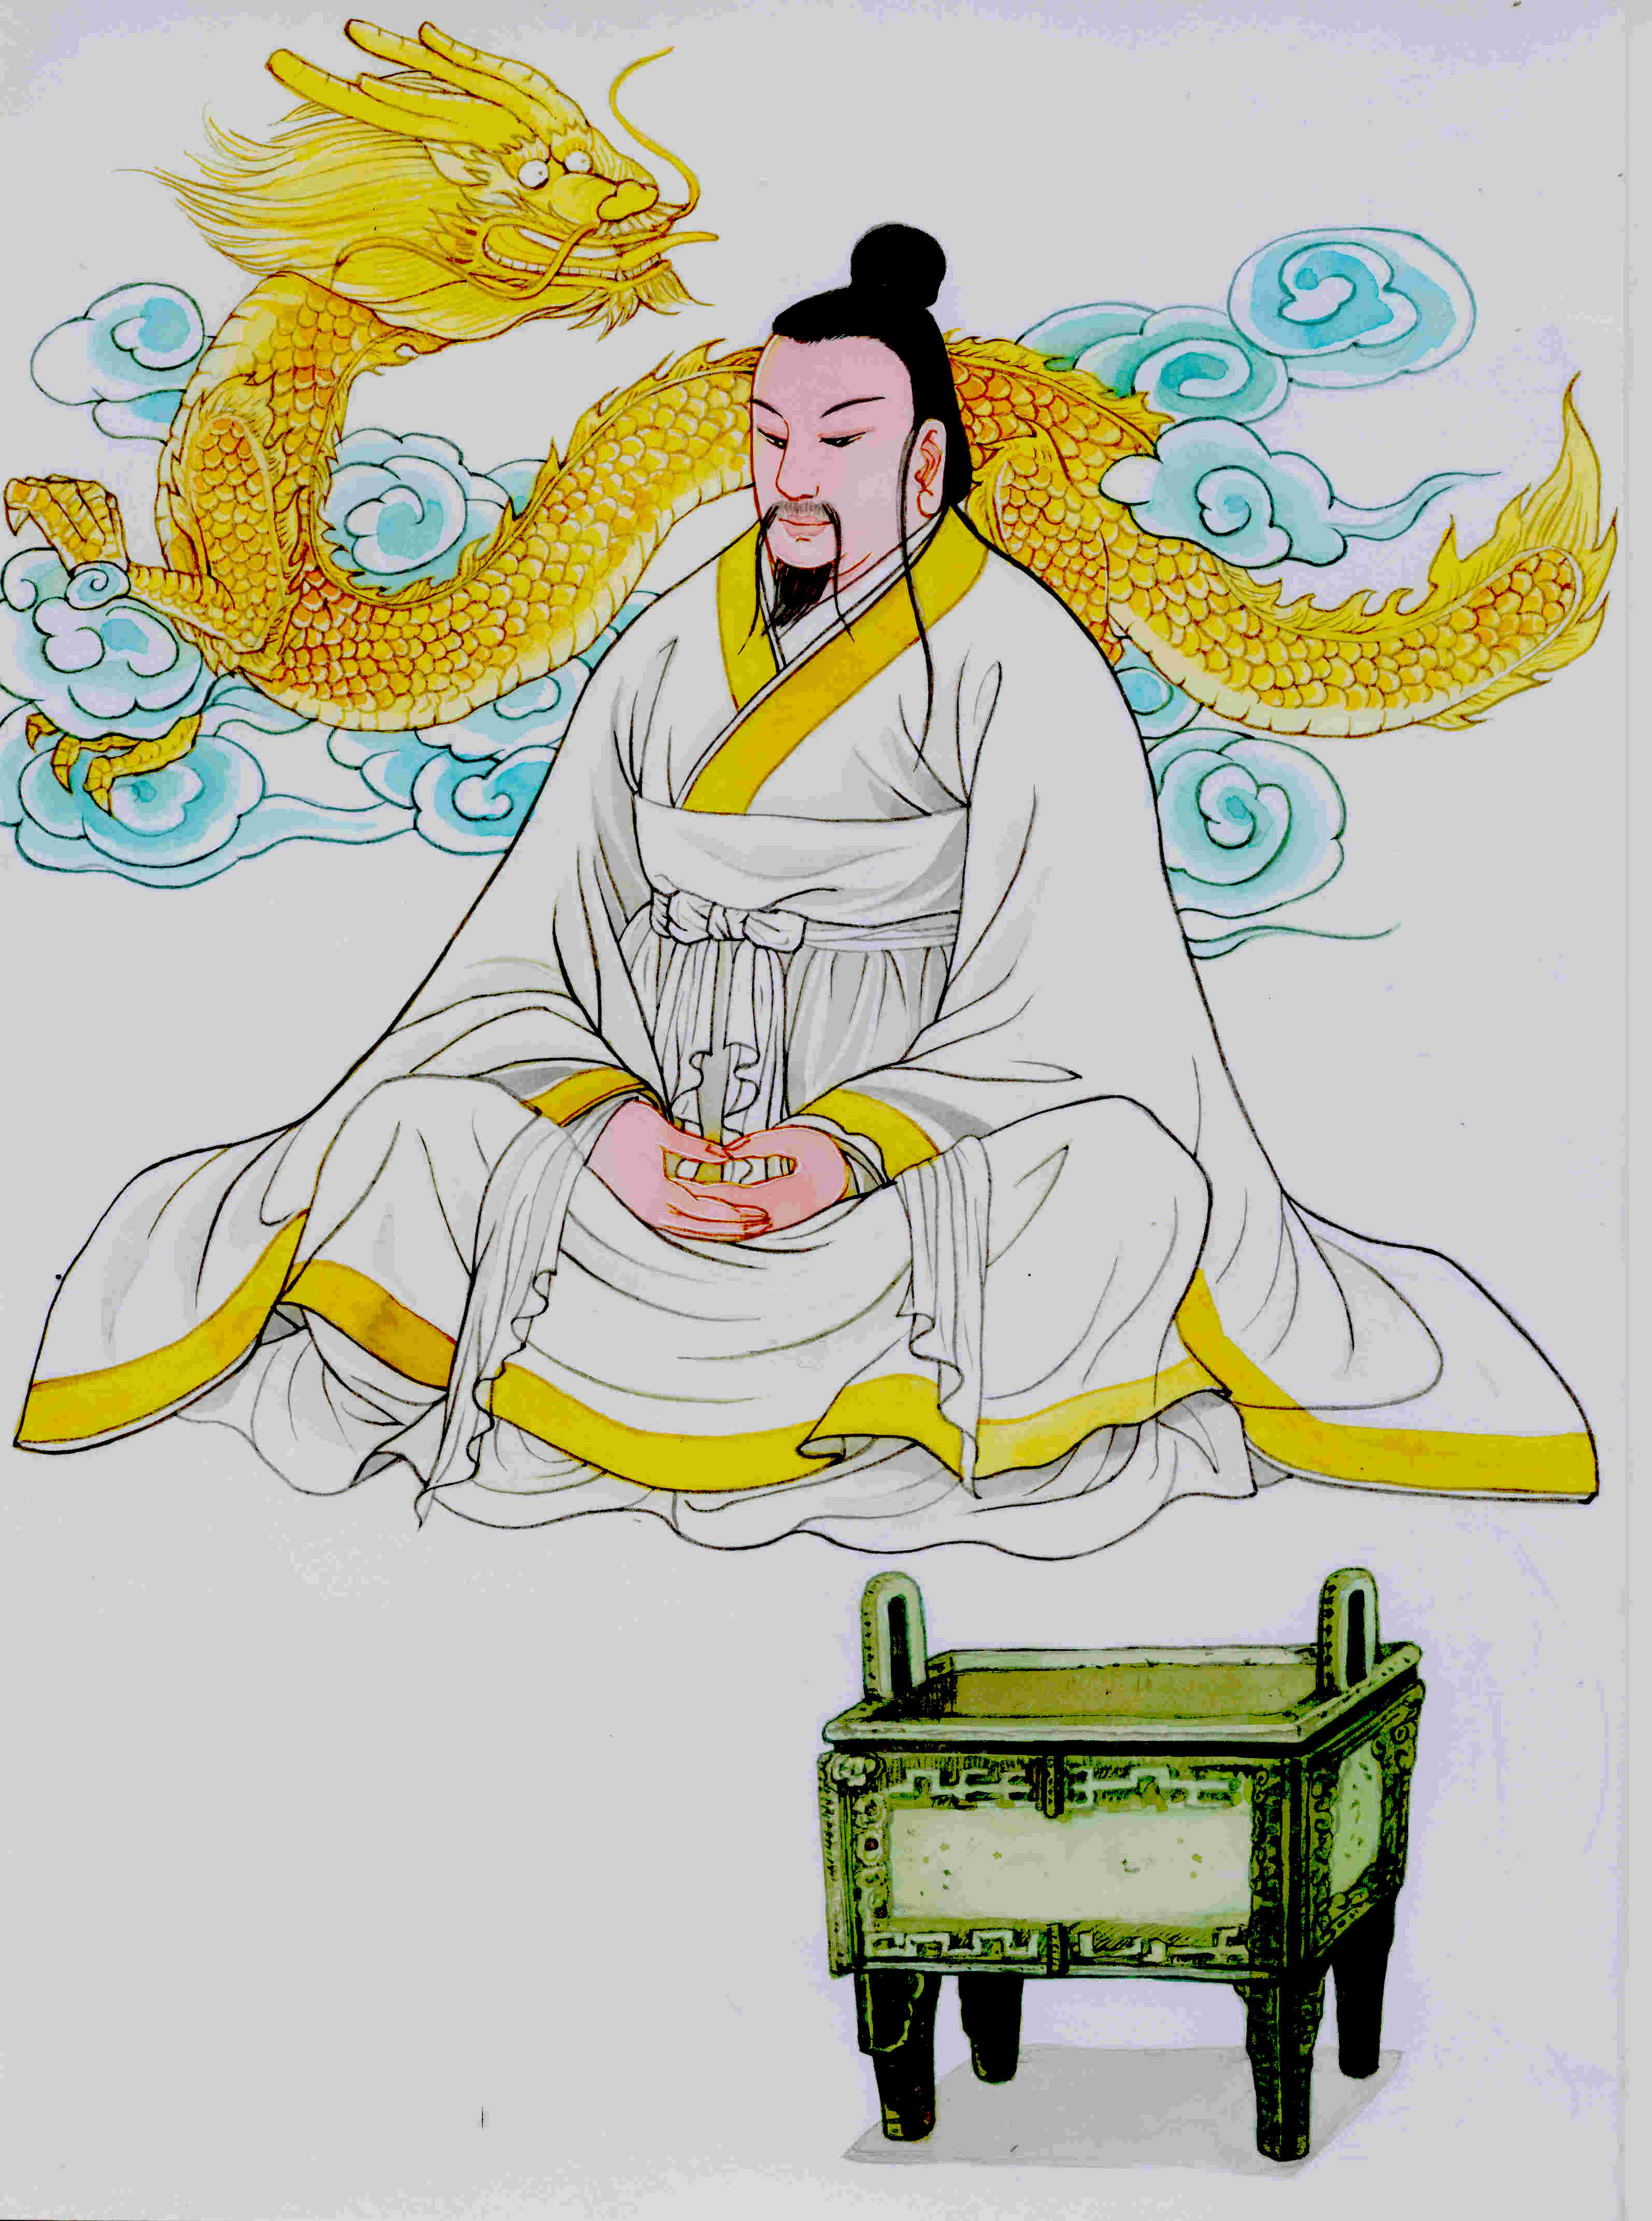 Хуан ди китайская мифология